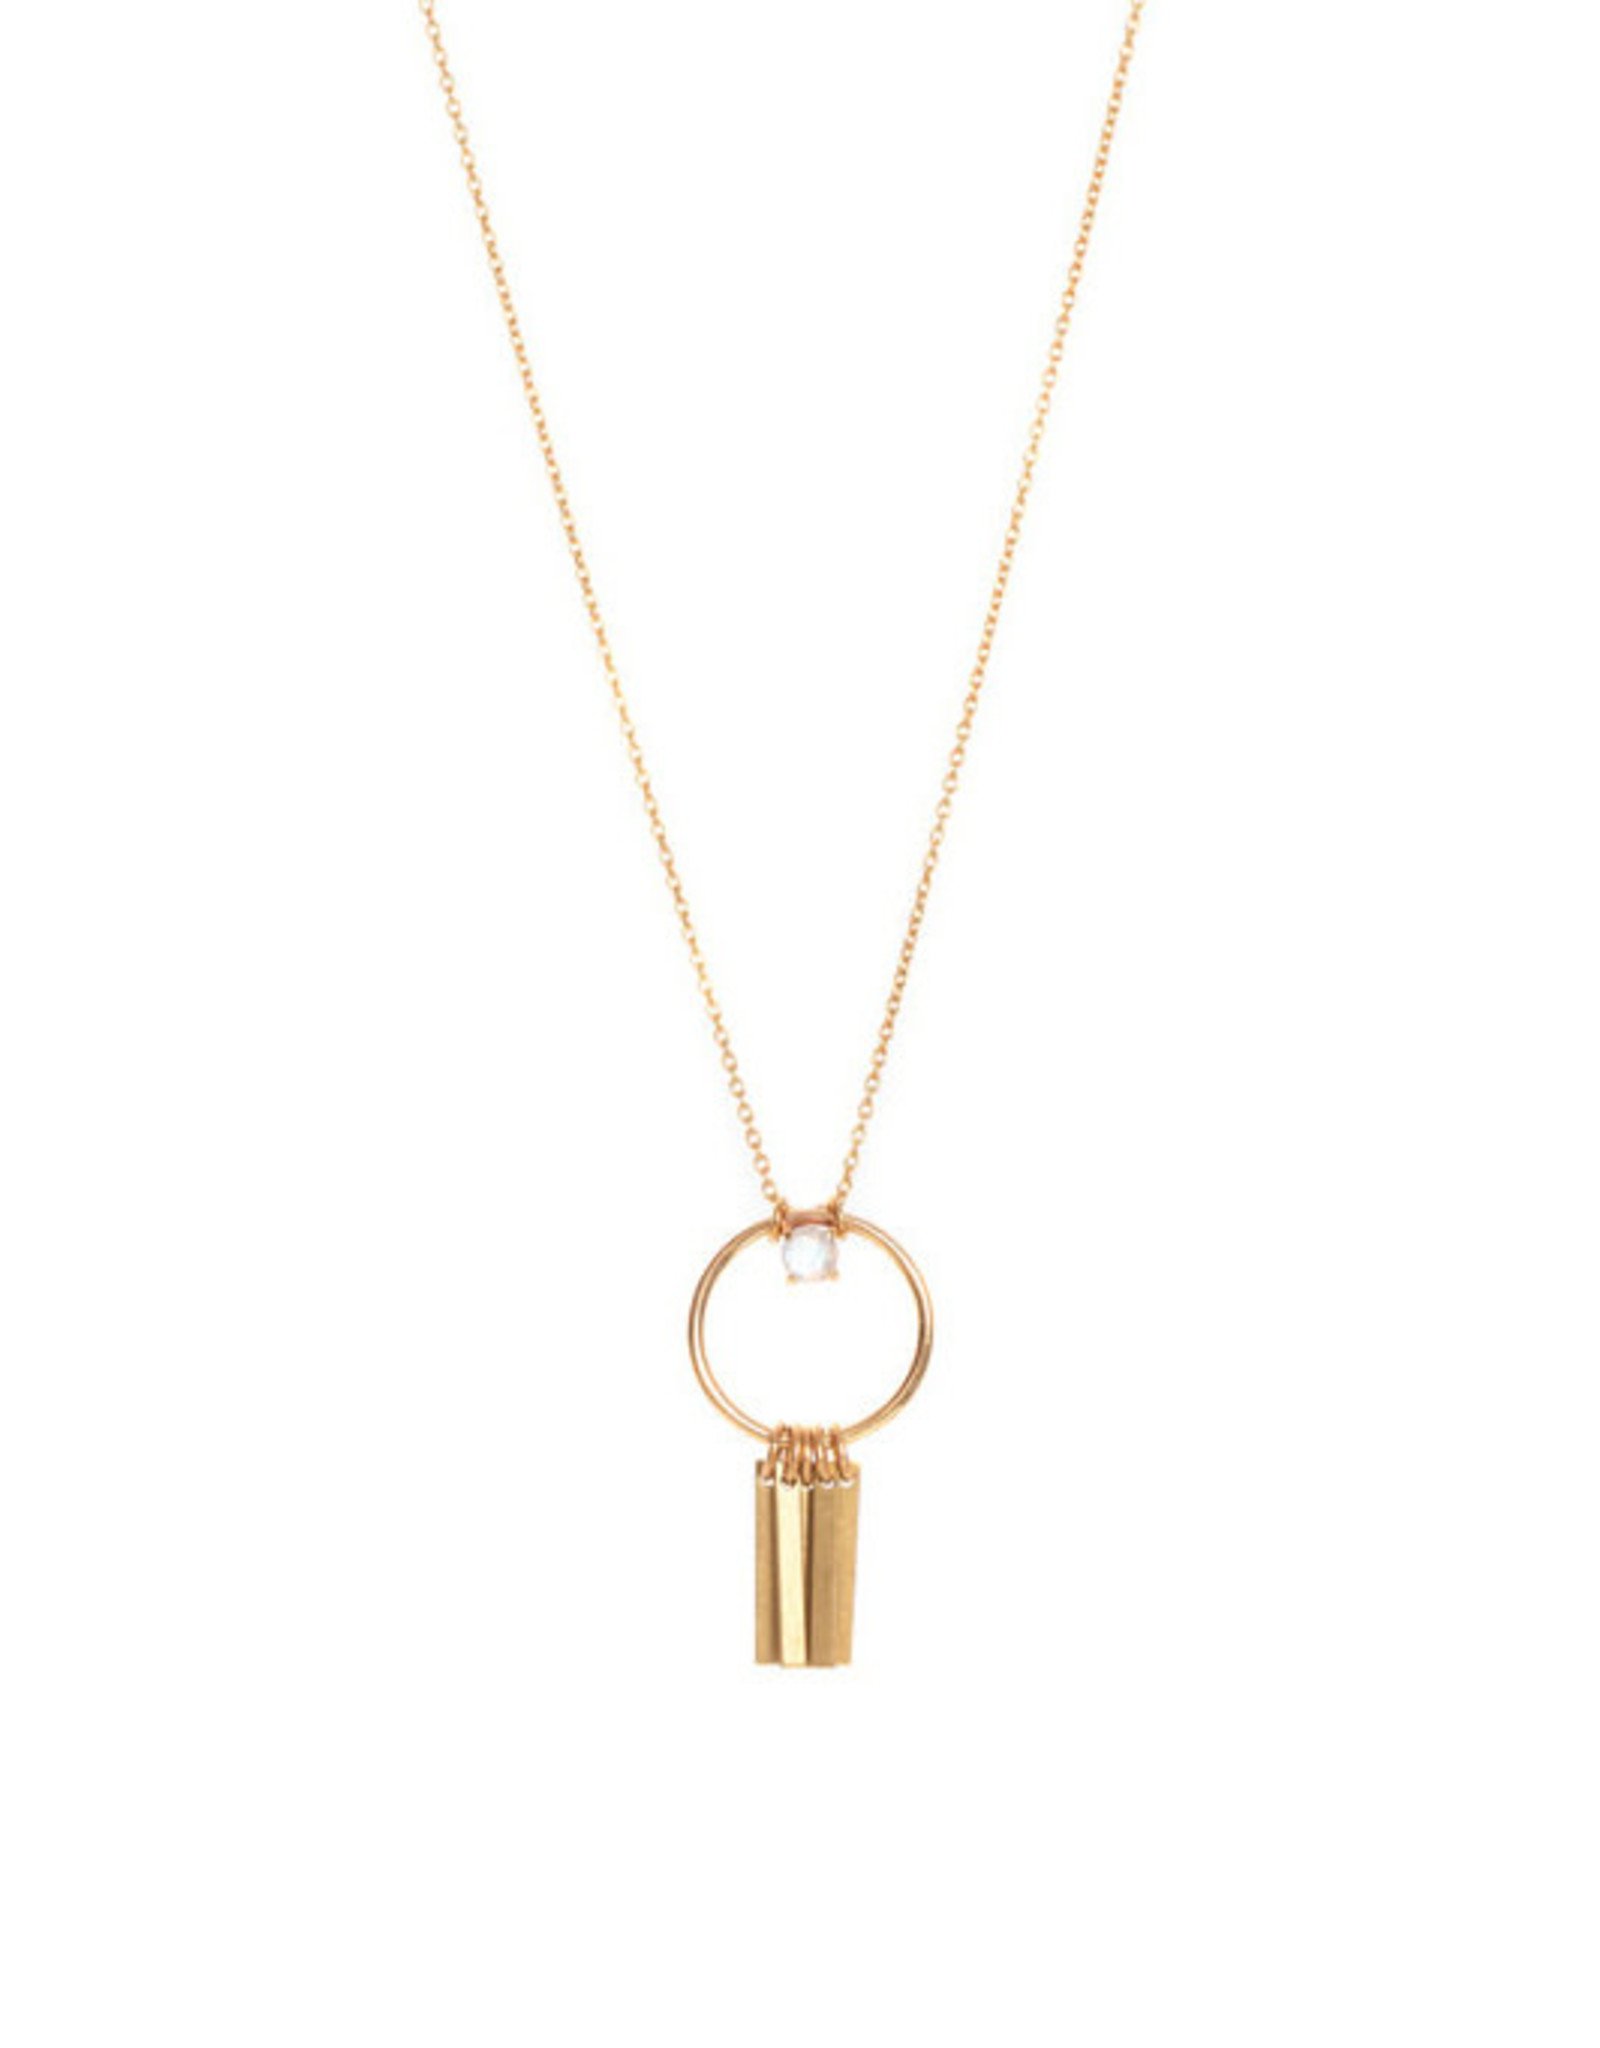 Hailey Gerrits Designs Arbutus Necklace - Moonstone